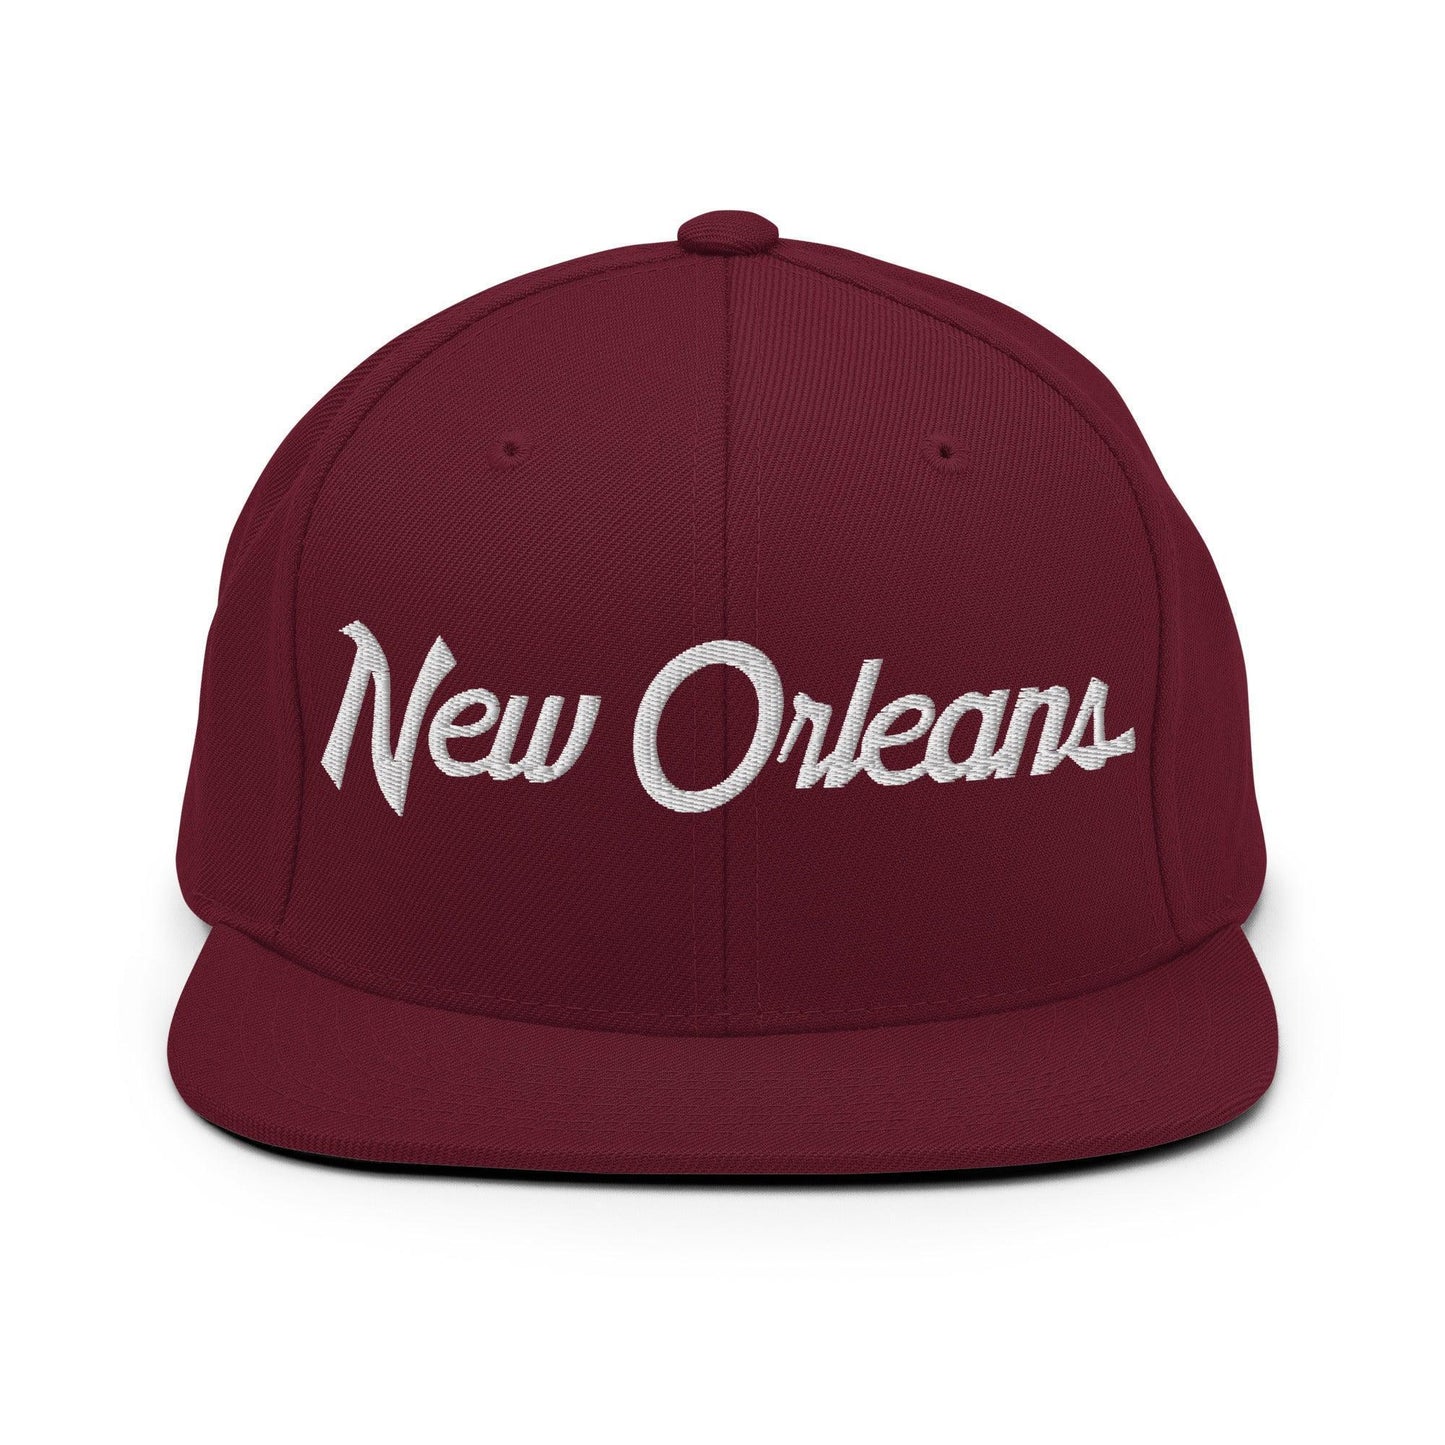 New Orleans Script Snapback Hat Maroon